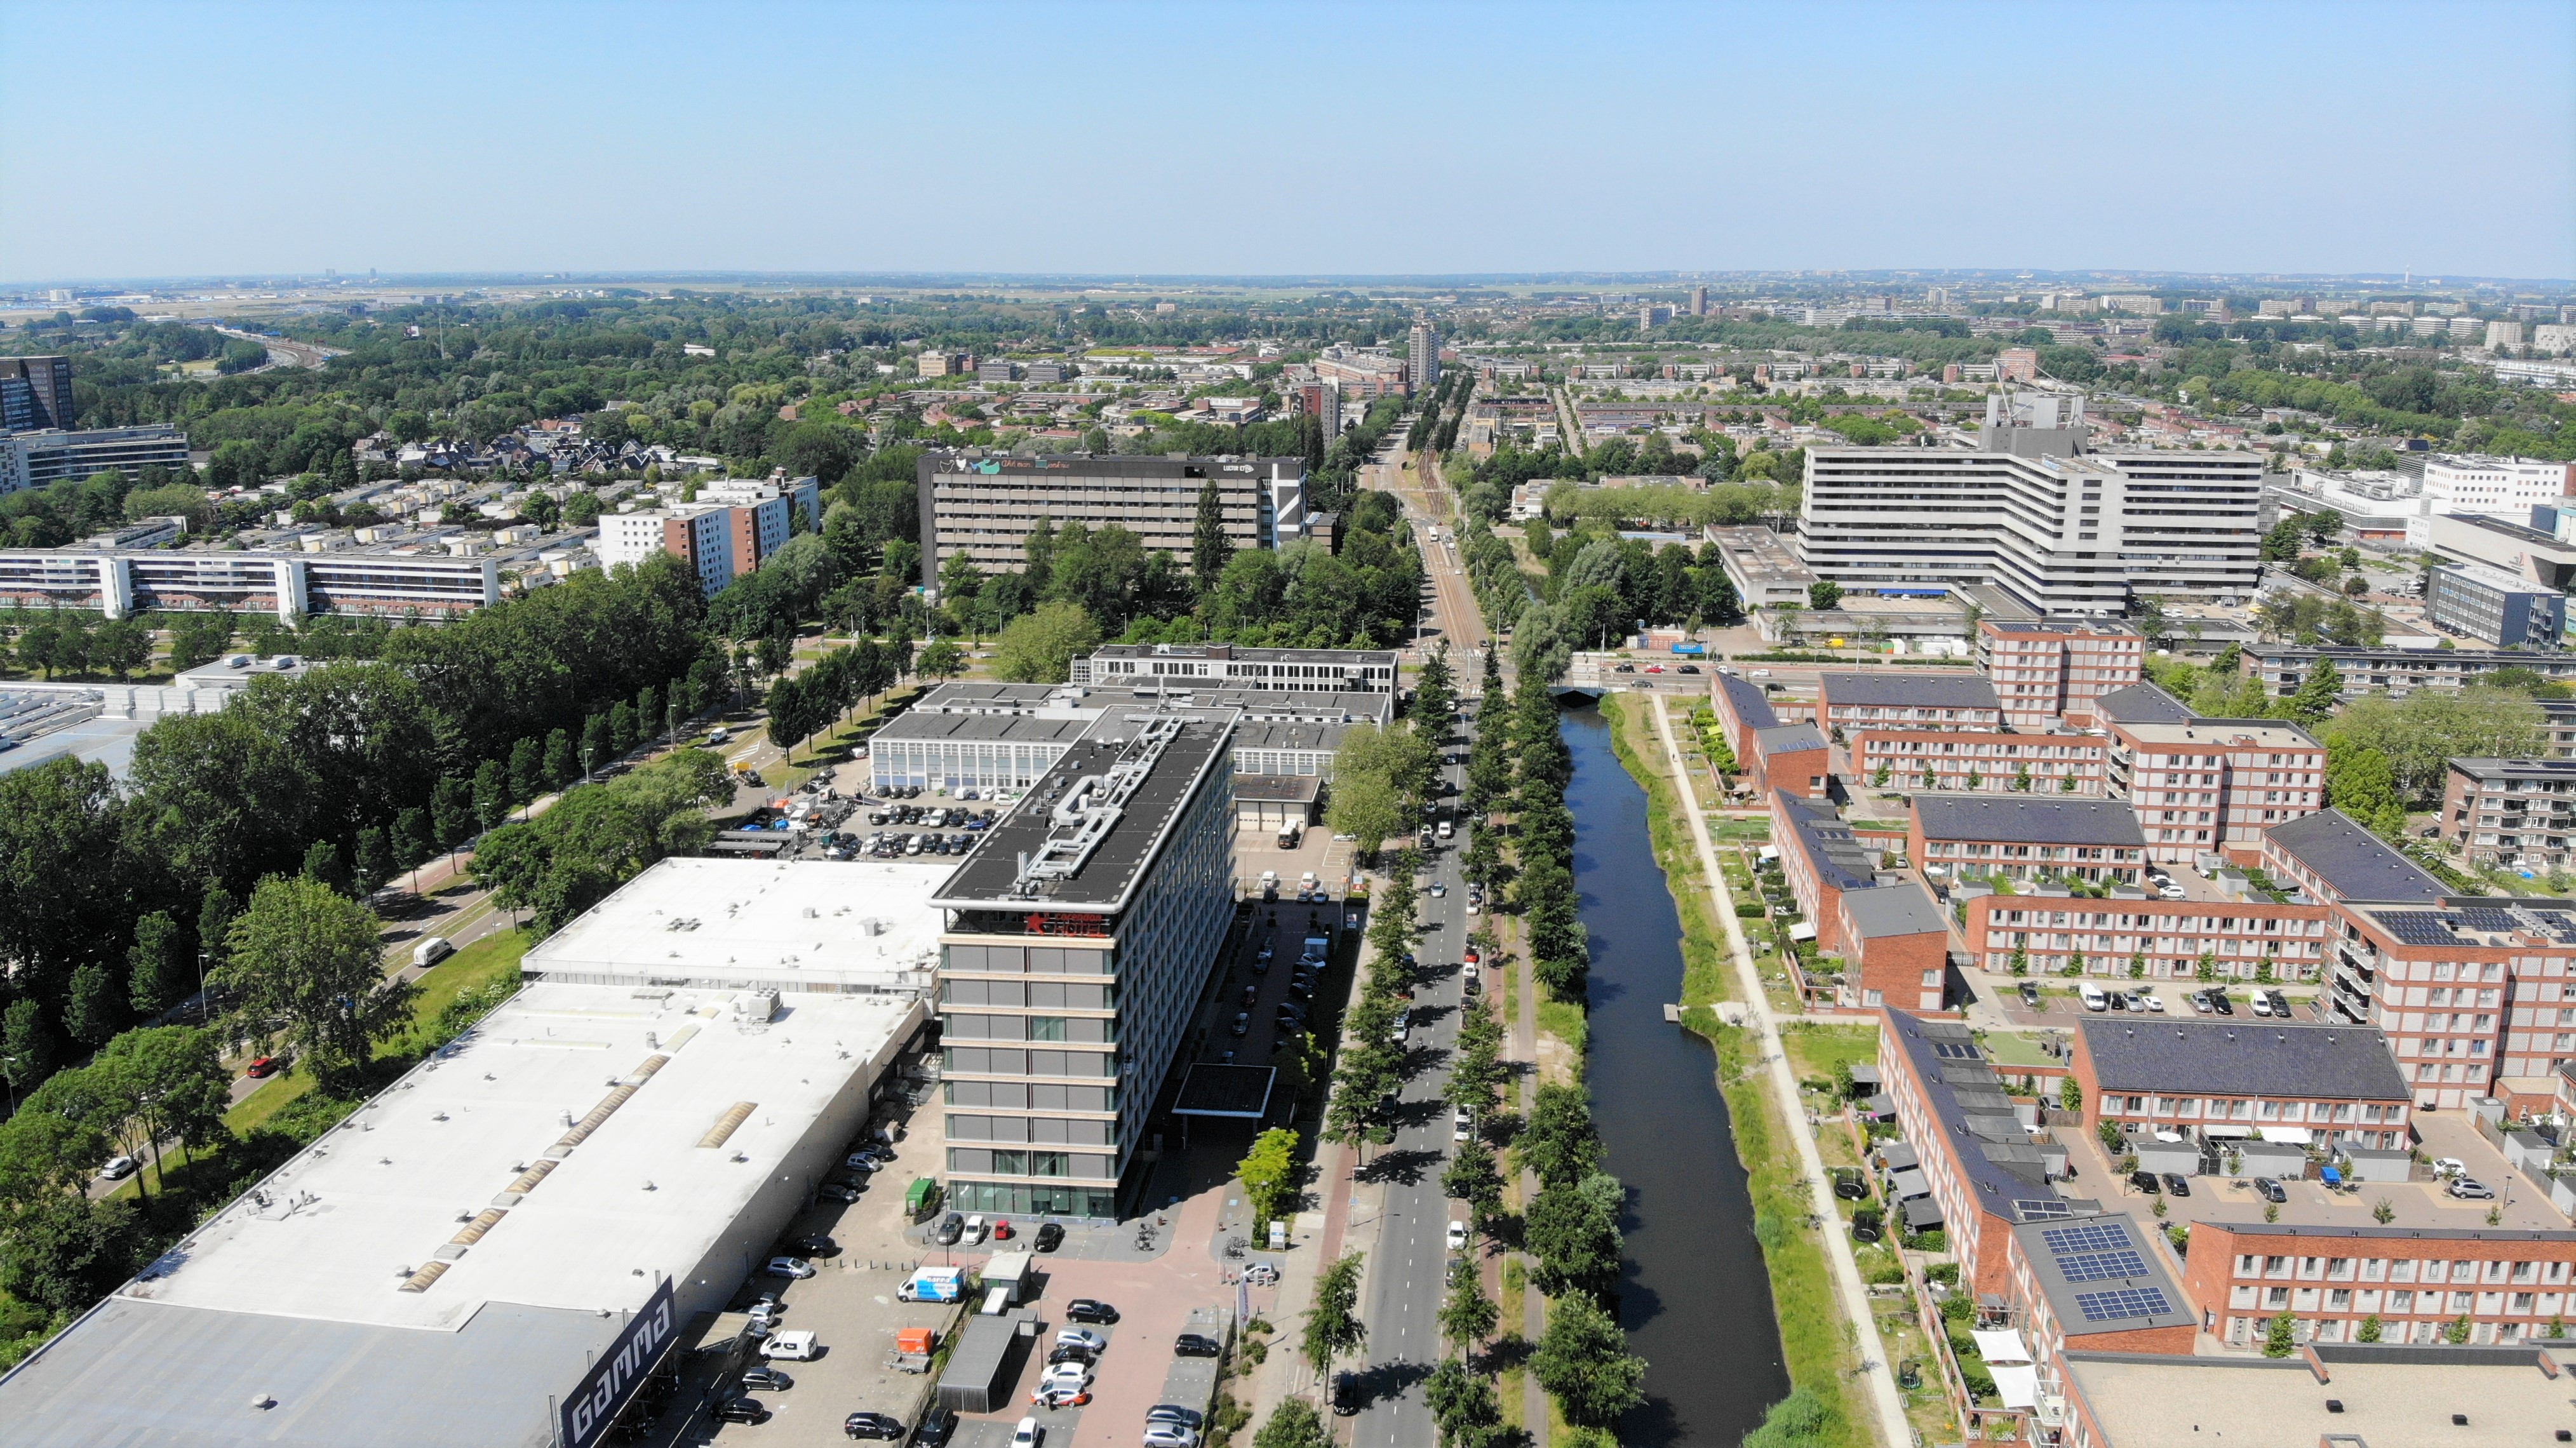 ICN first development in Amsterdam Netherla